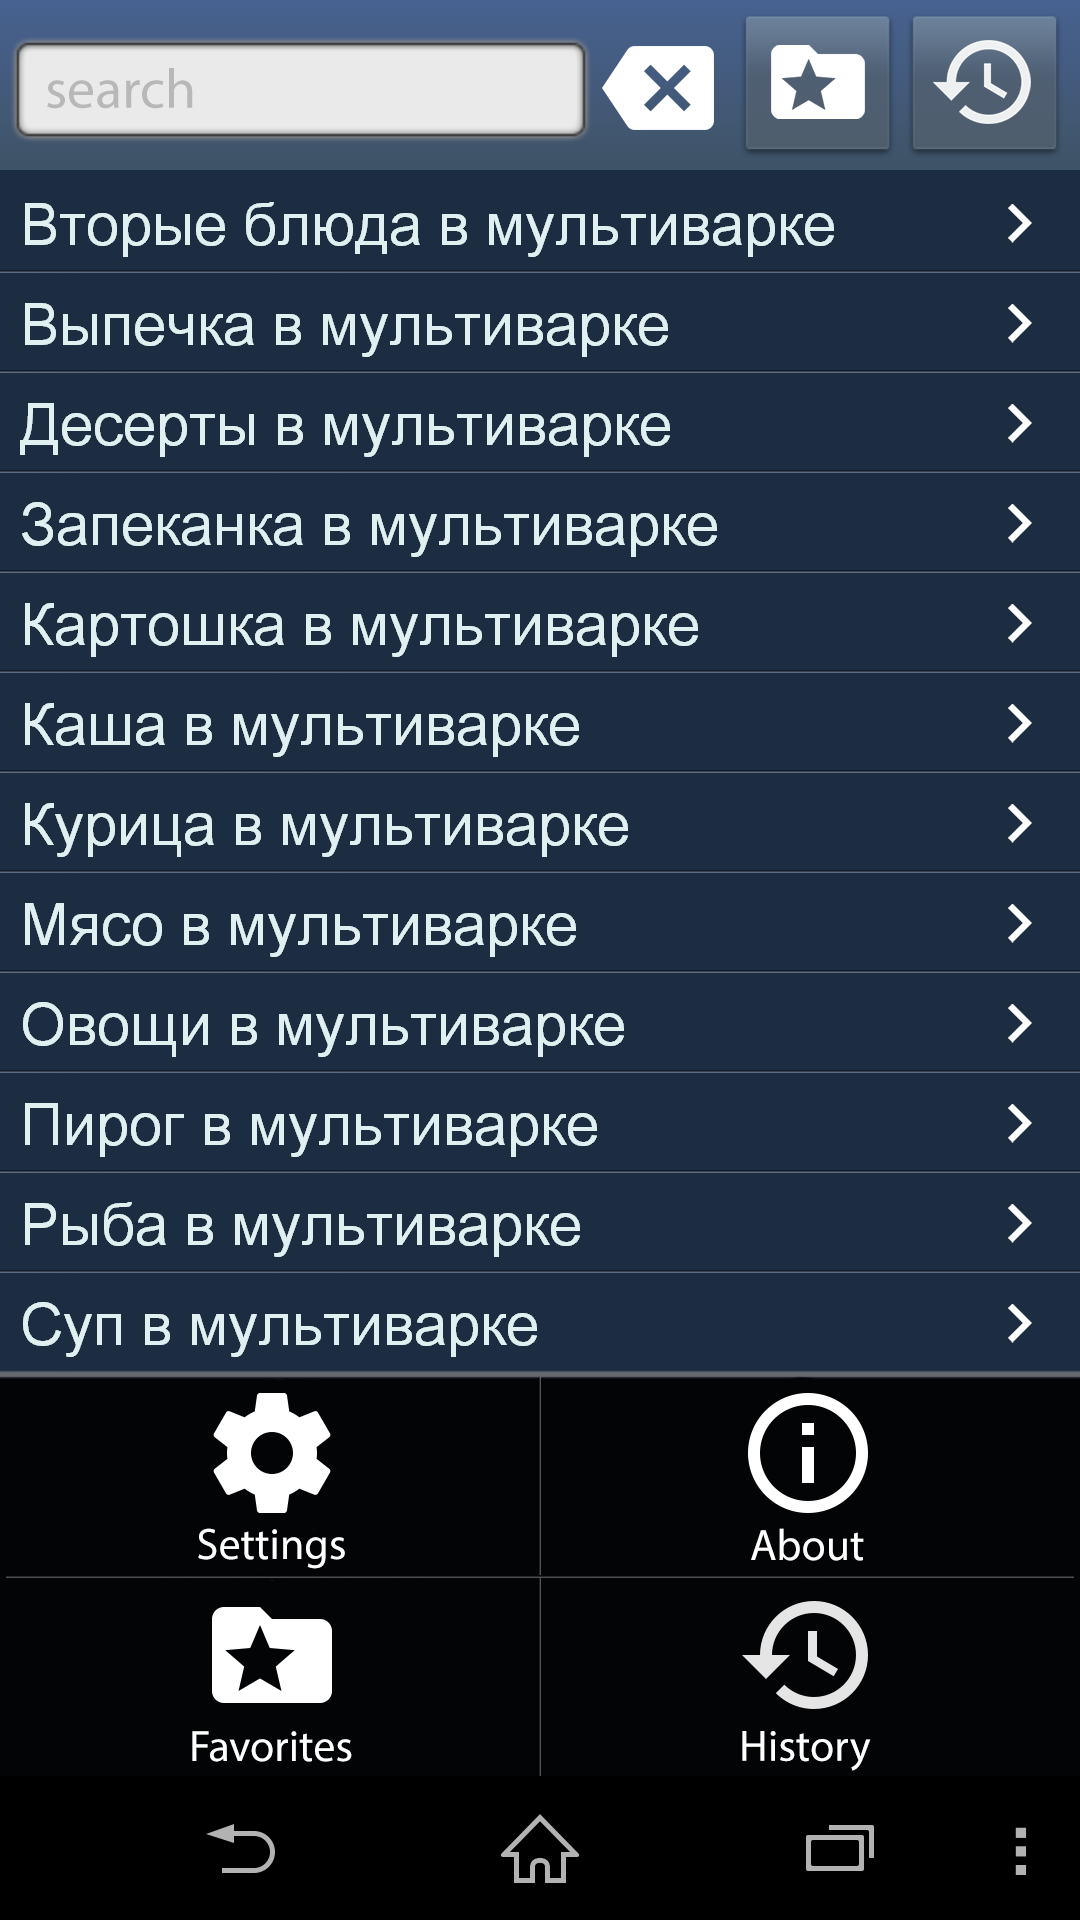 Android application Рецепты для мультиварки + screenshort